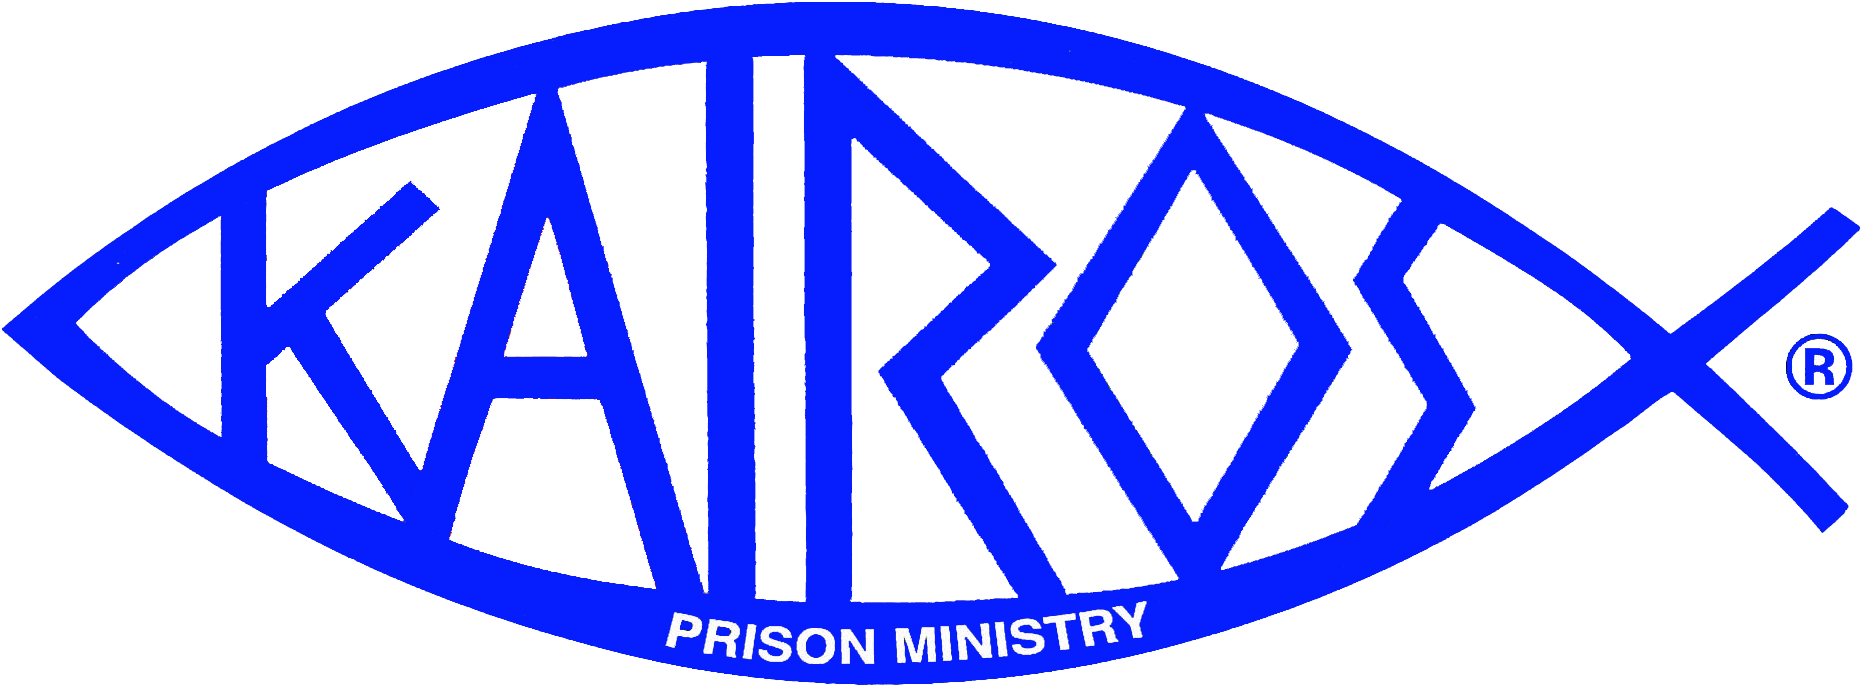 Portable Network Graphics - Kairos Prison Ministry (2044x793)